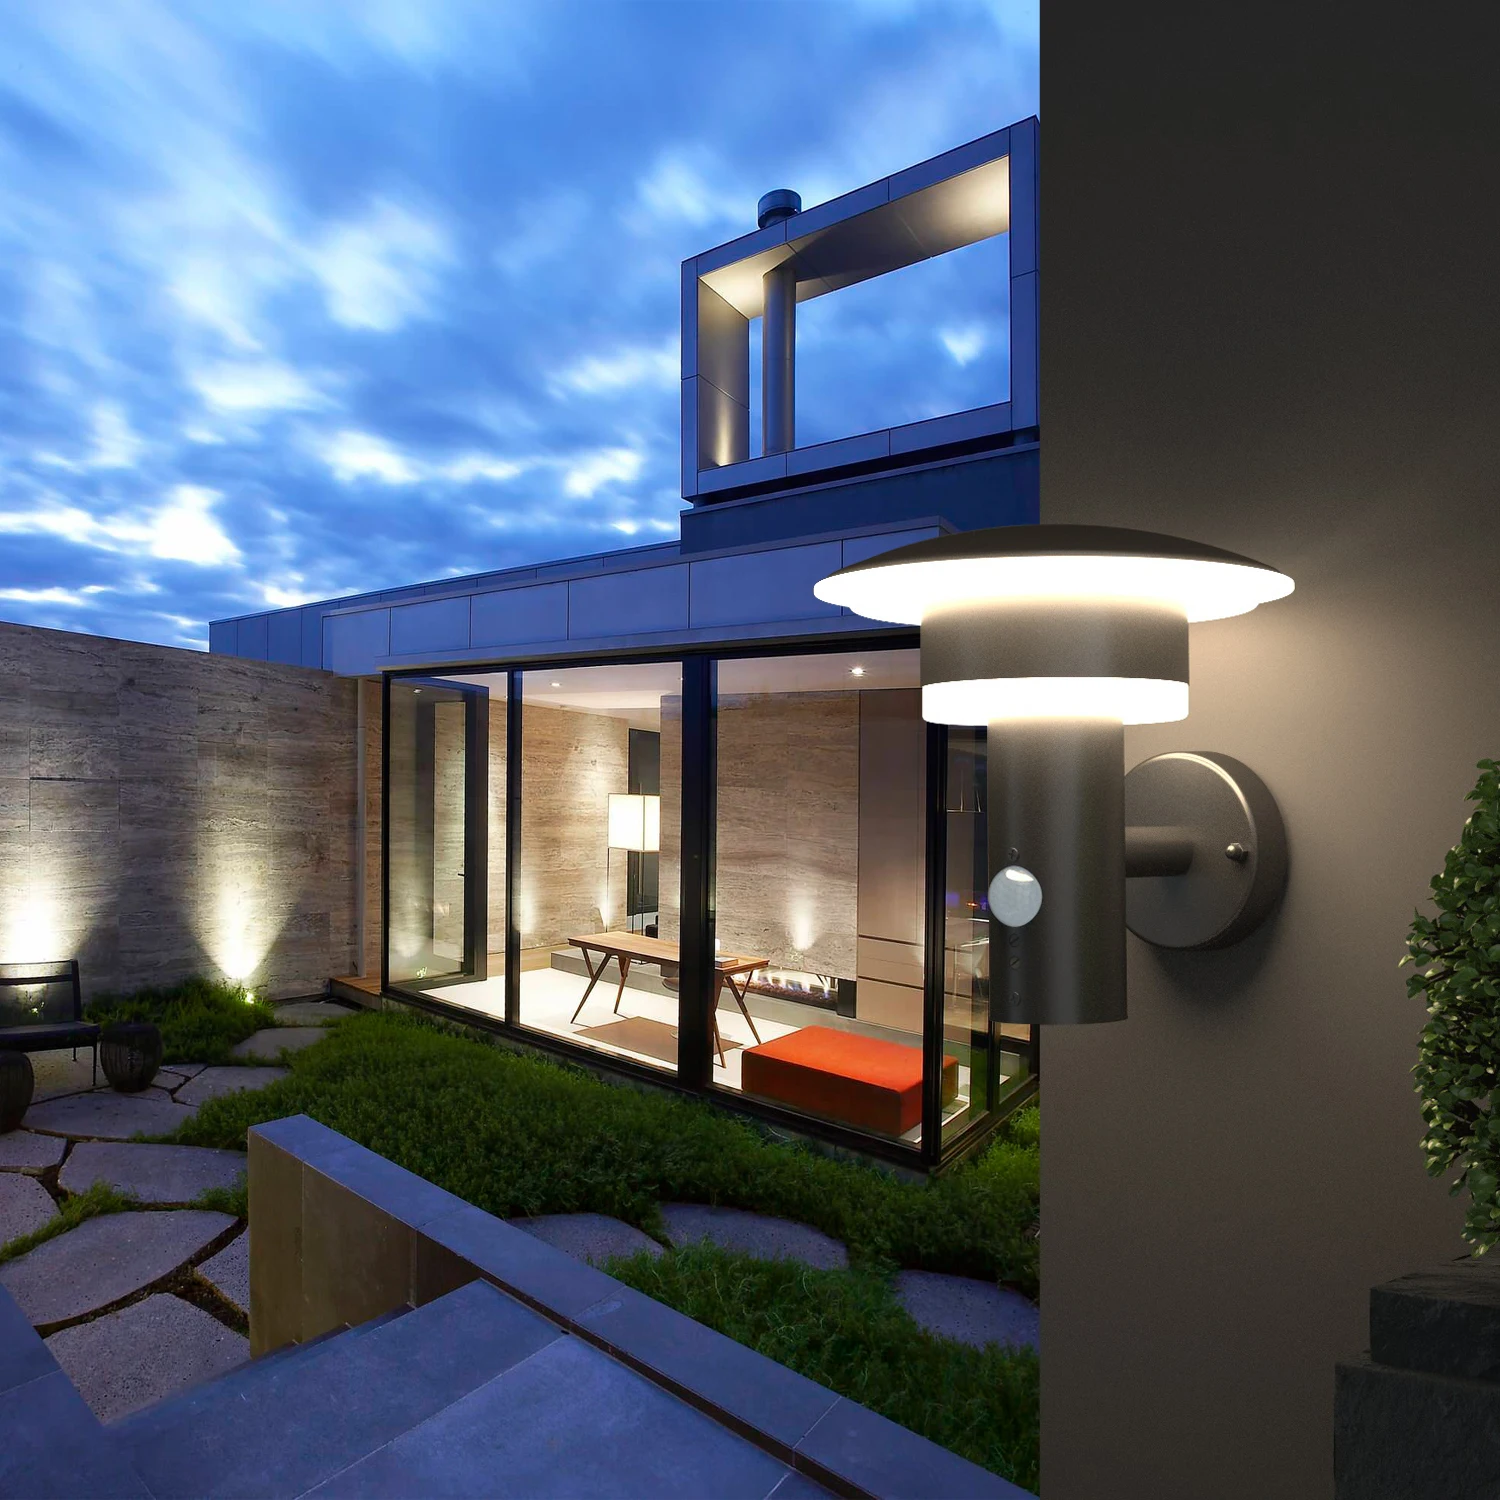 NBHANYUAN Outdoor Moden LED Wall Light PIR Motion Sensor Stainless Steel Garden 